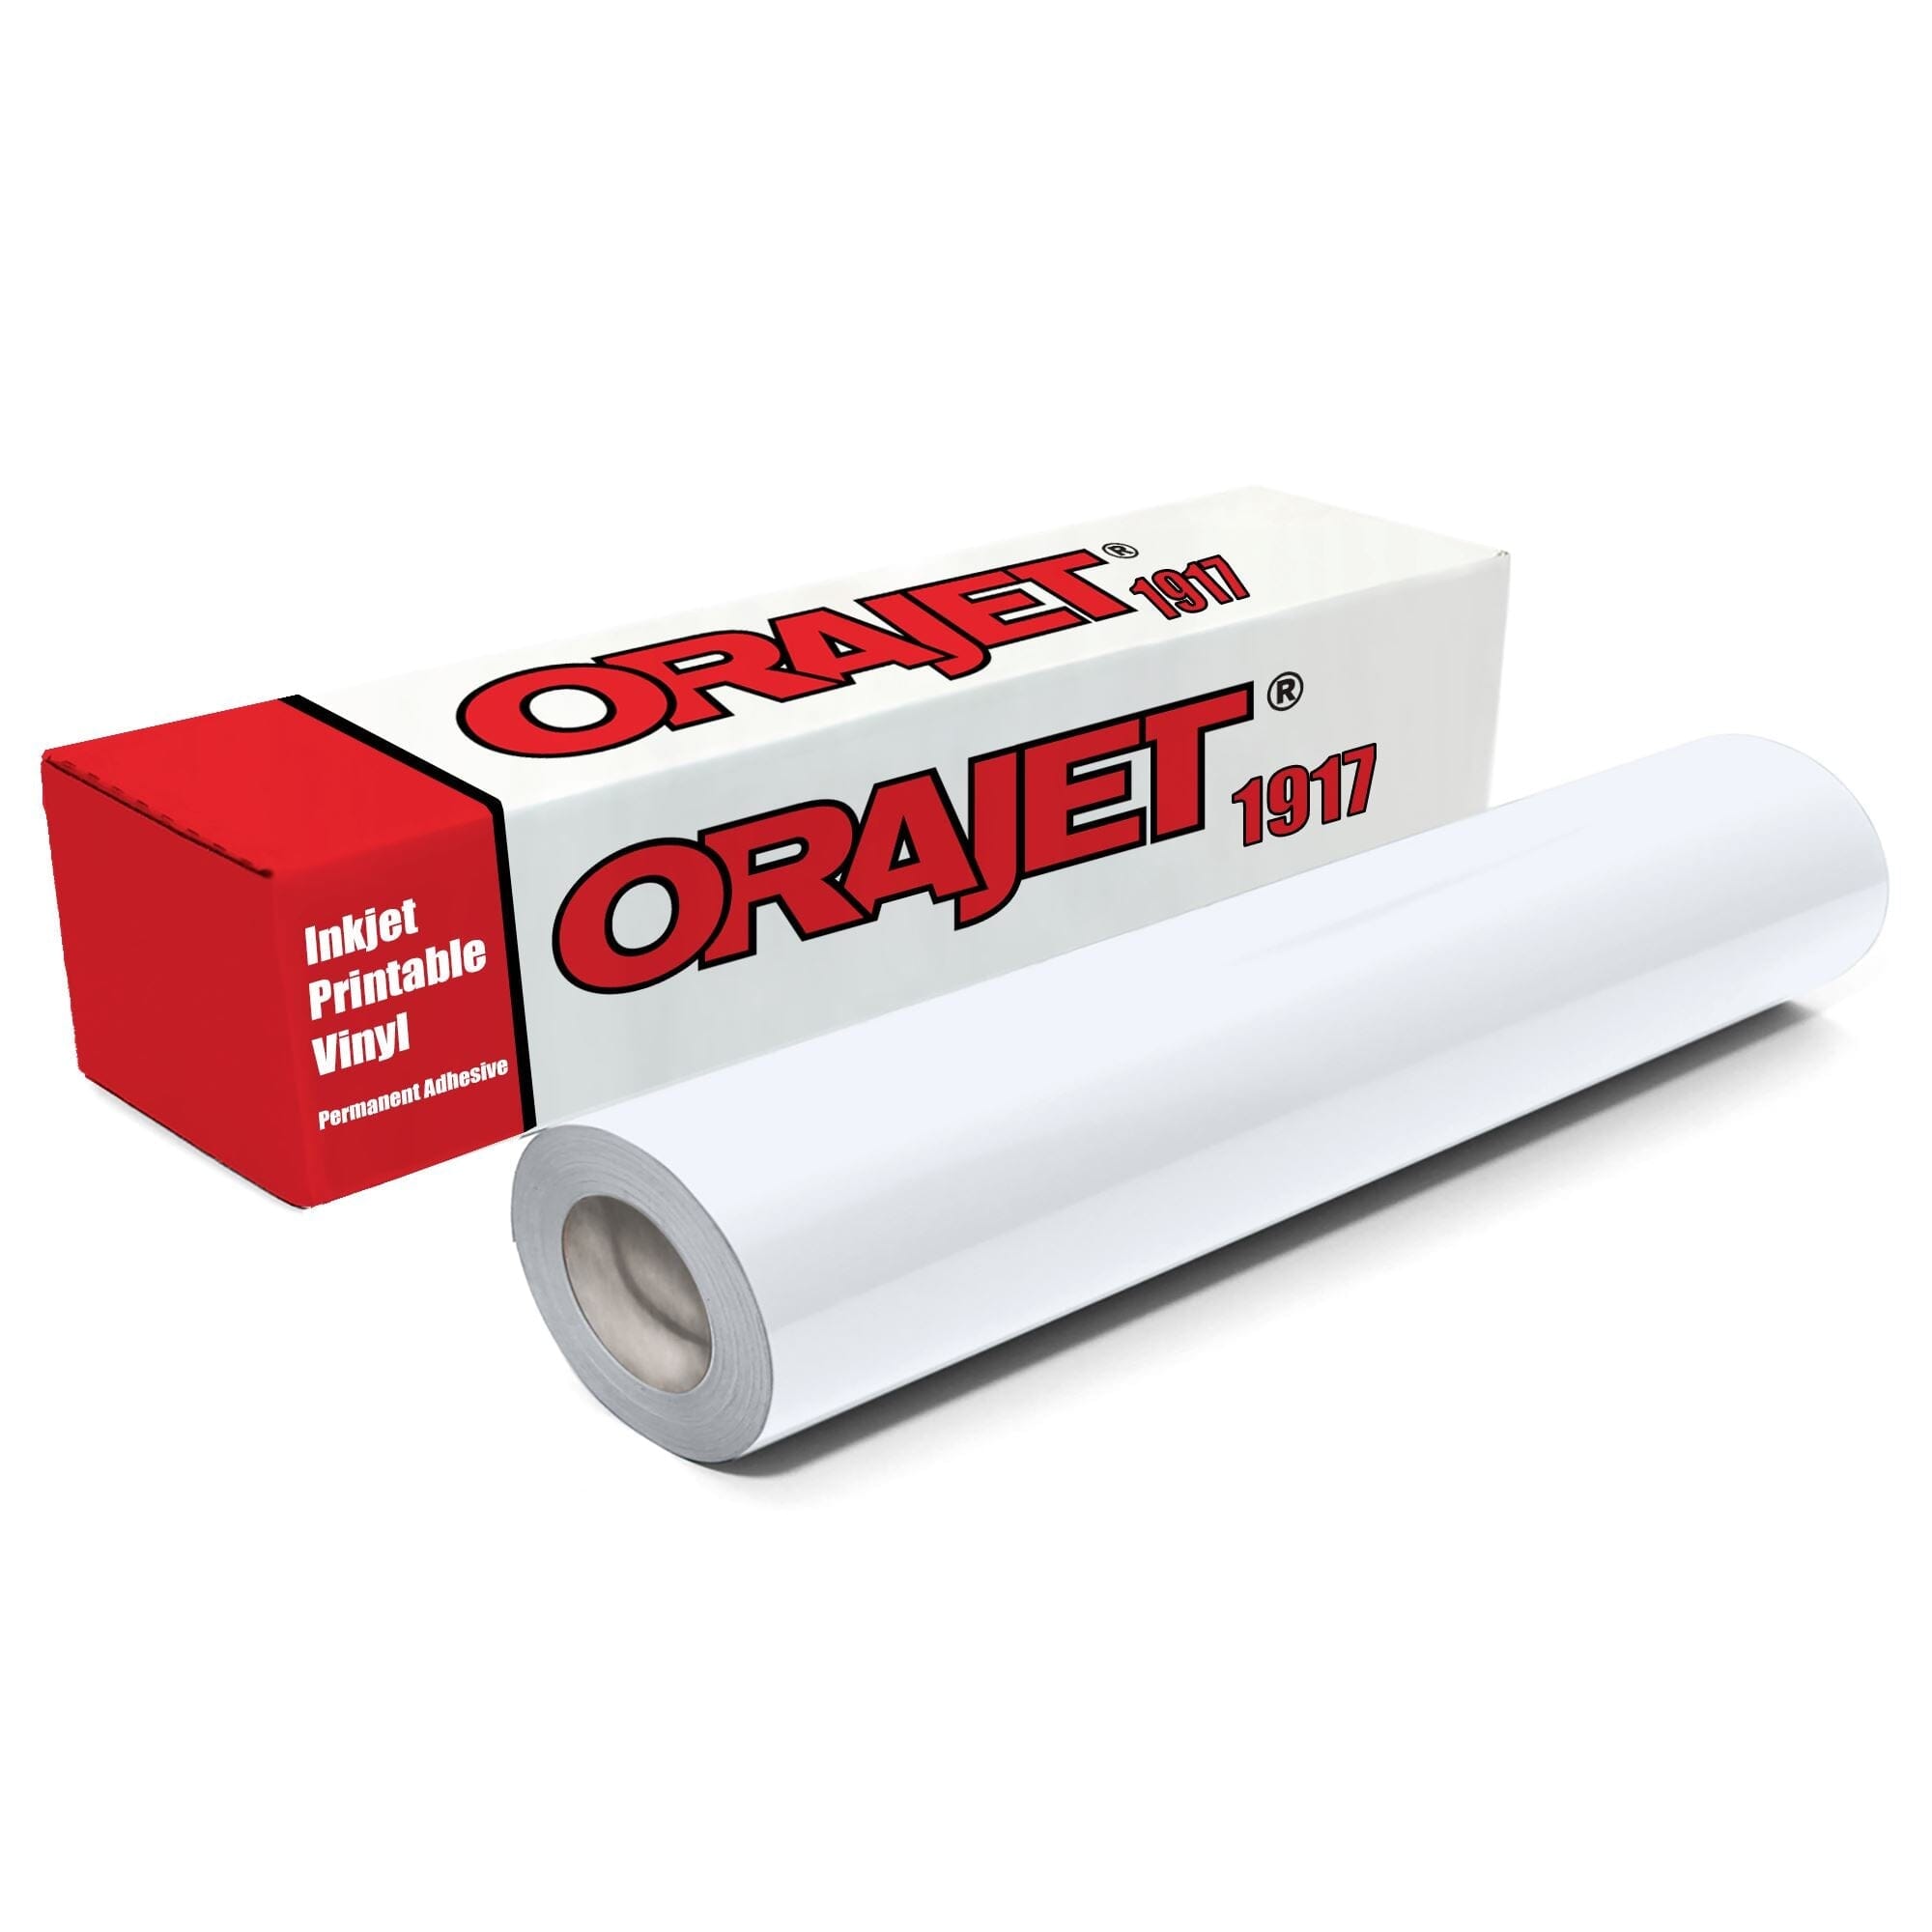 Oracal 1917 Inkjet Printable Vinyl Rolls on Sale